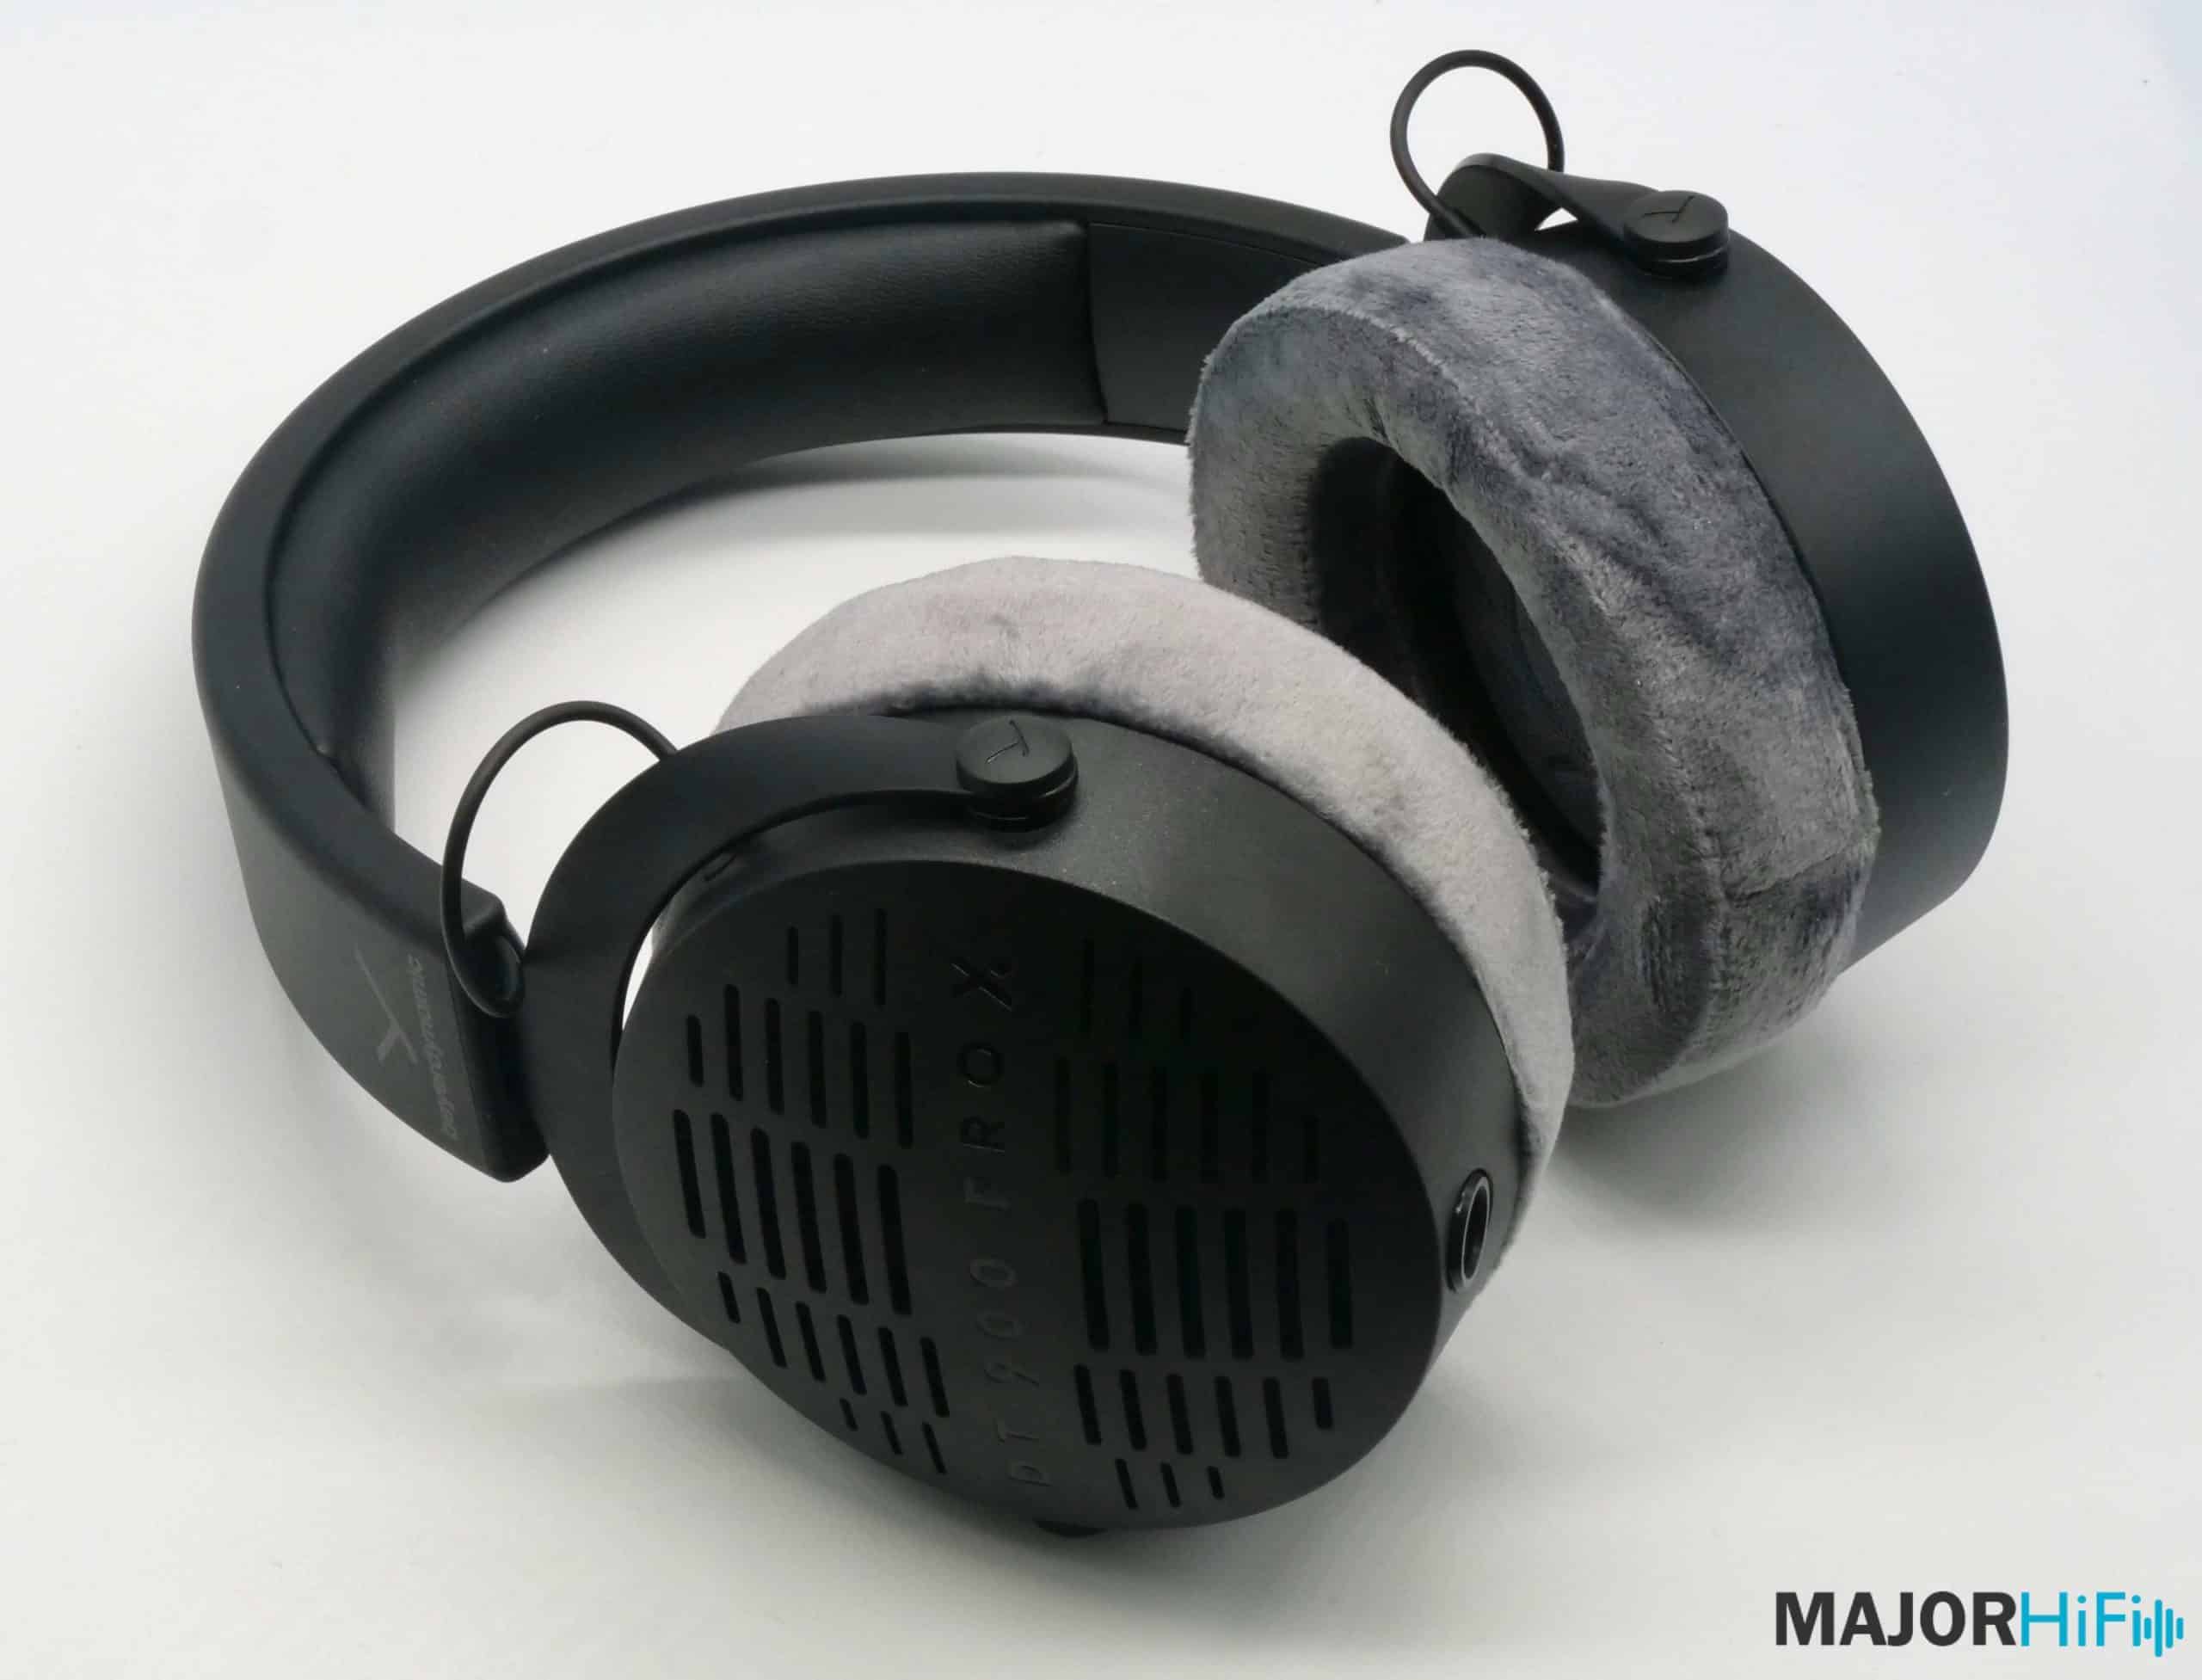 Beyerdynamic DT 900 Pro X headphone review